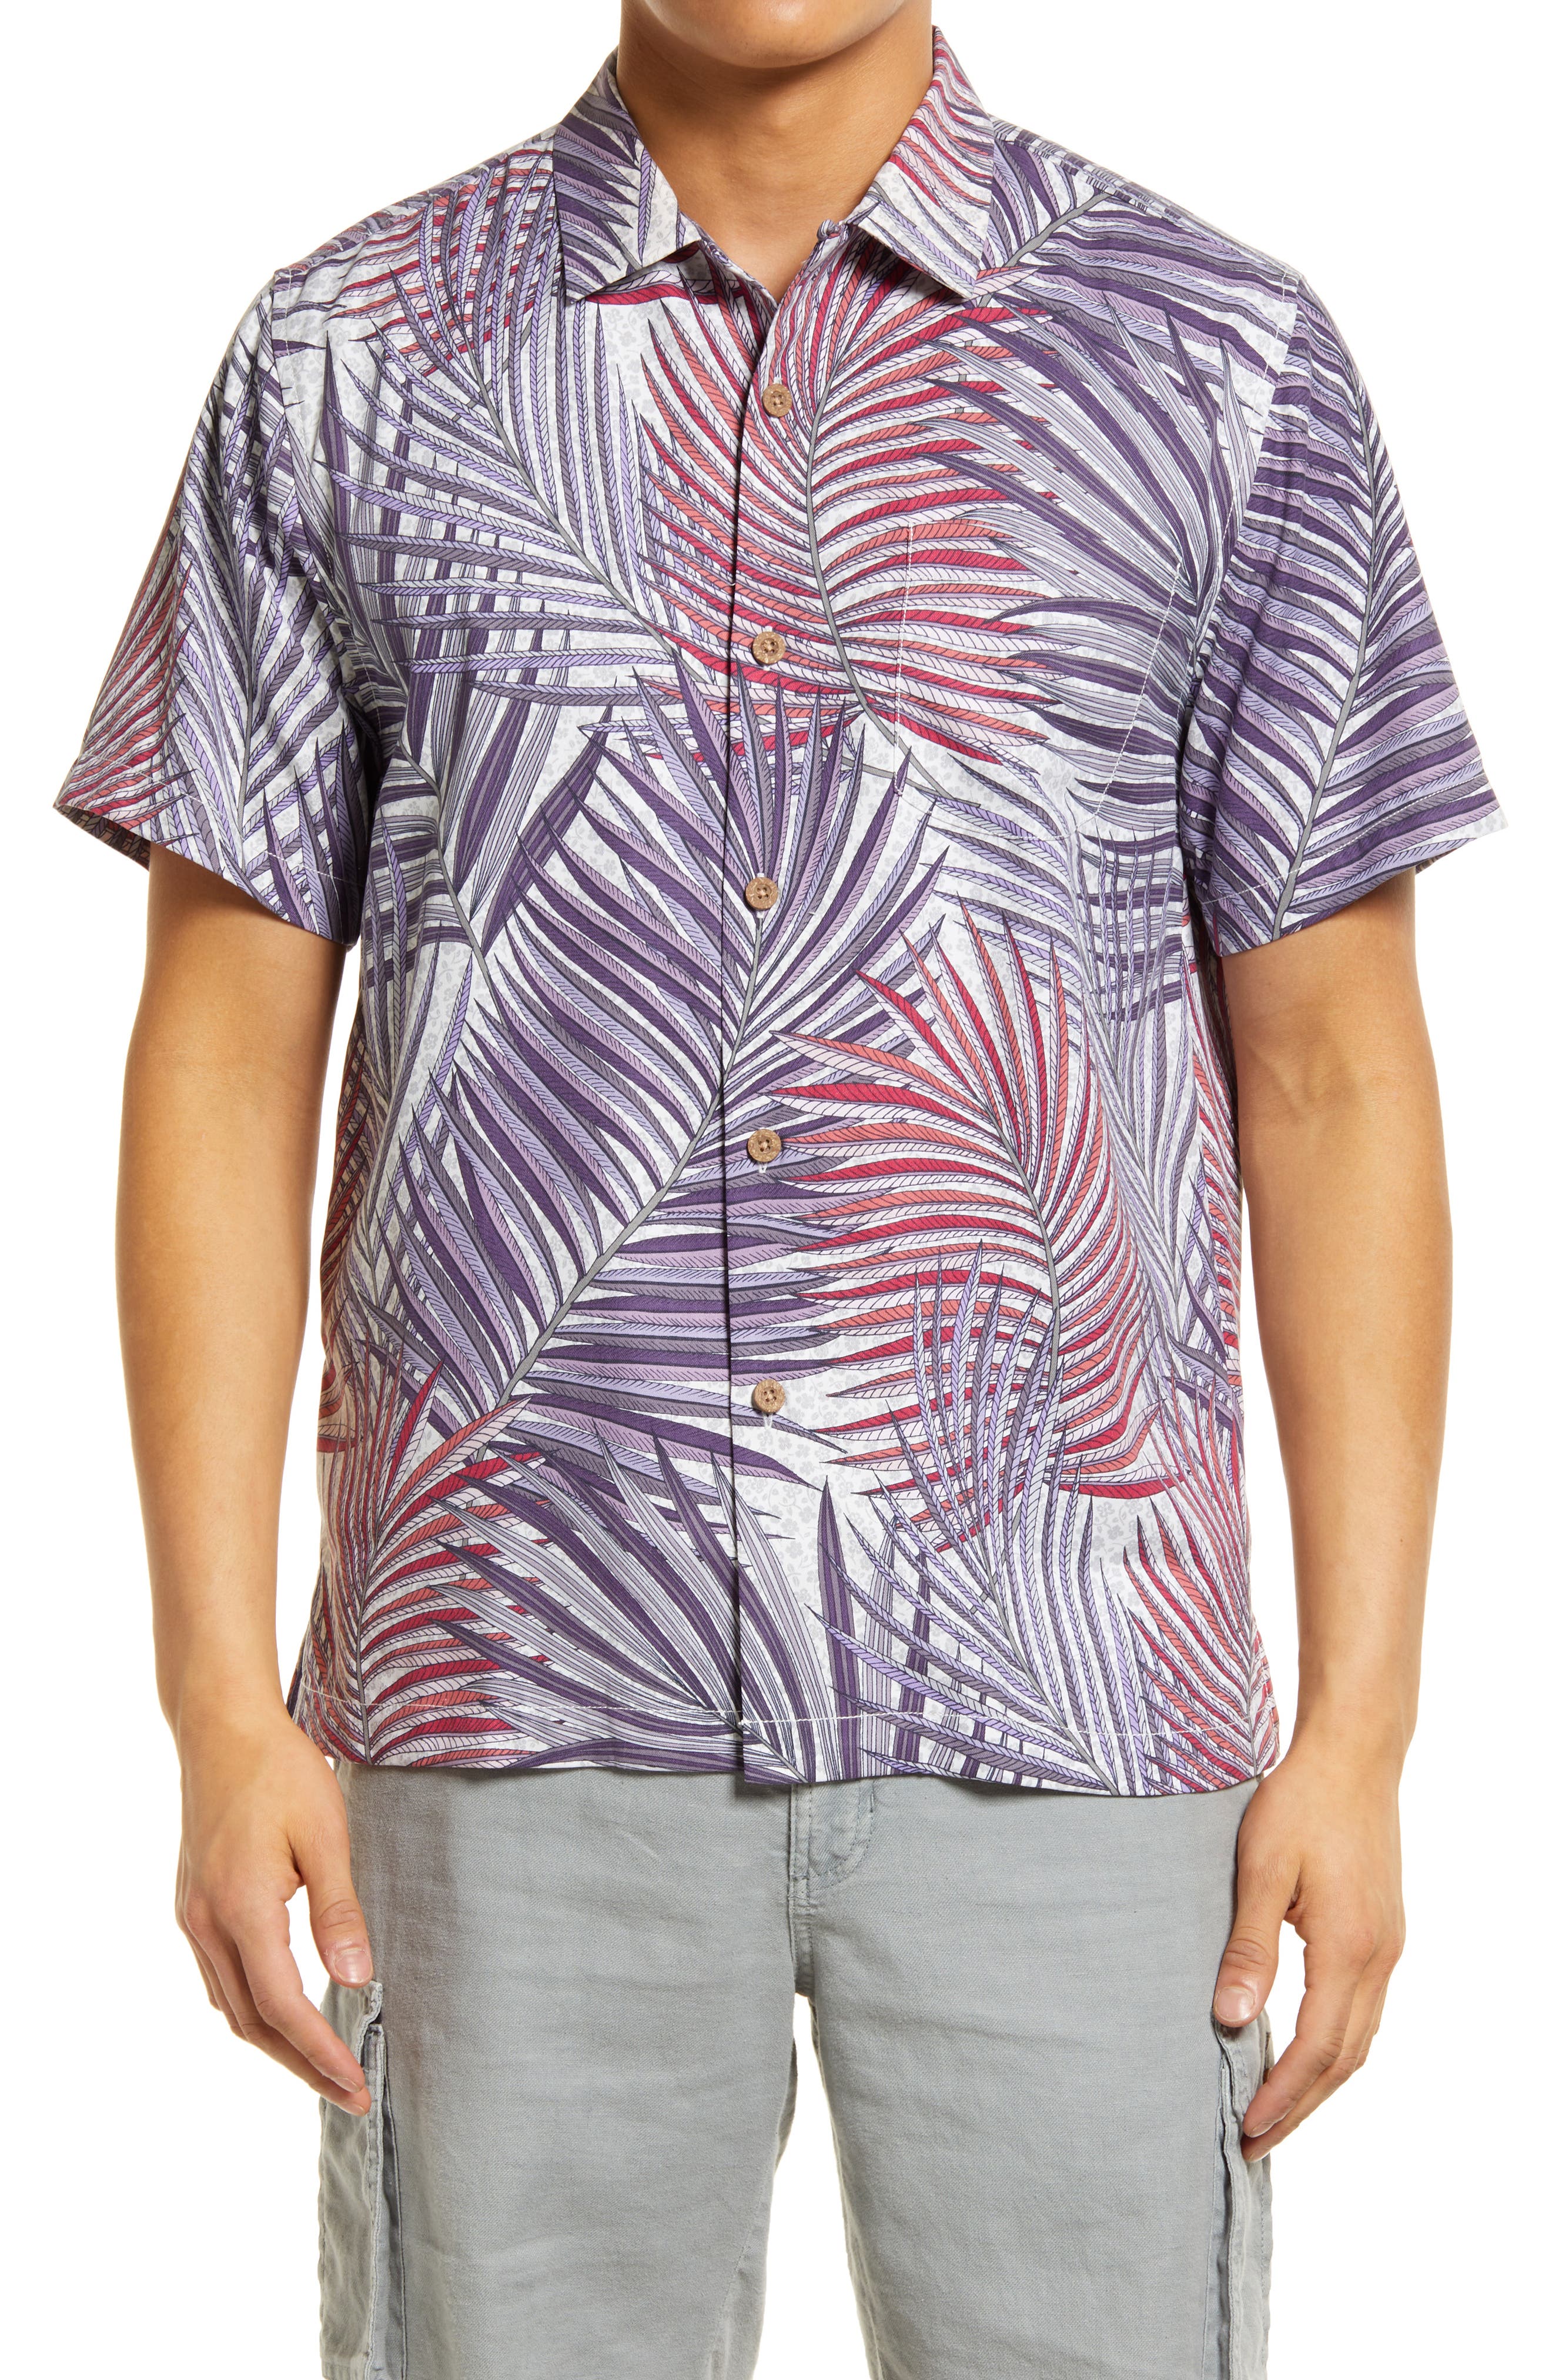 Men's Hawaiian Beach Lotus/Palm Leaf Pattern Jacquard Striped Jersey T-shirt